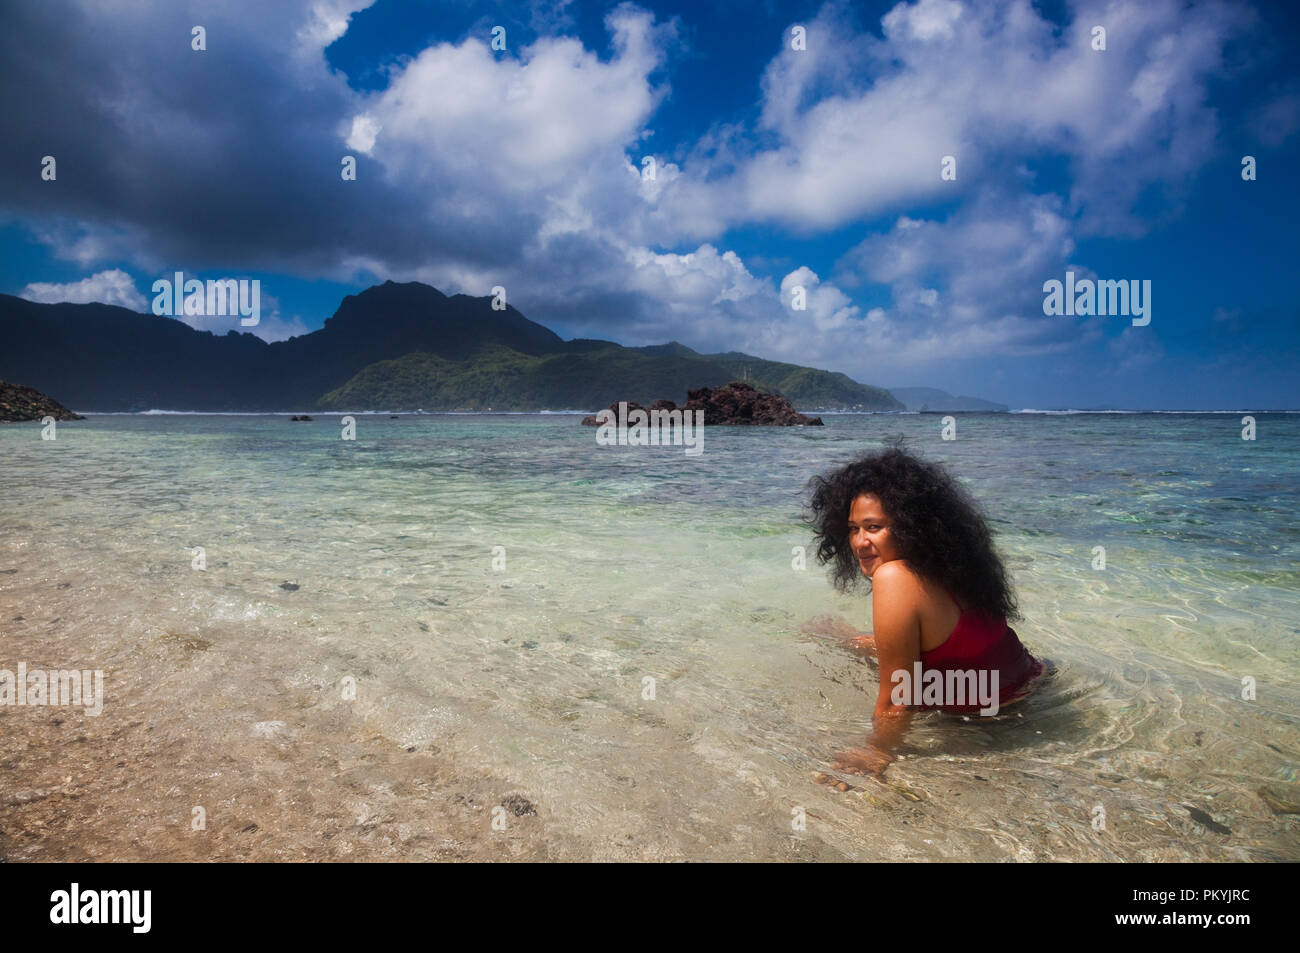 Beach scene in American Samoa. Stock Photo